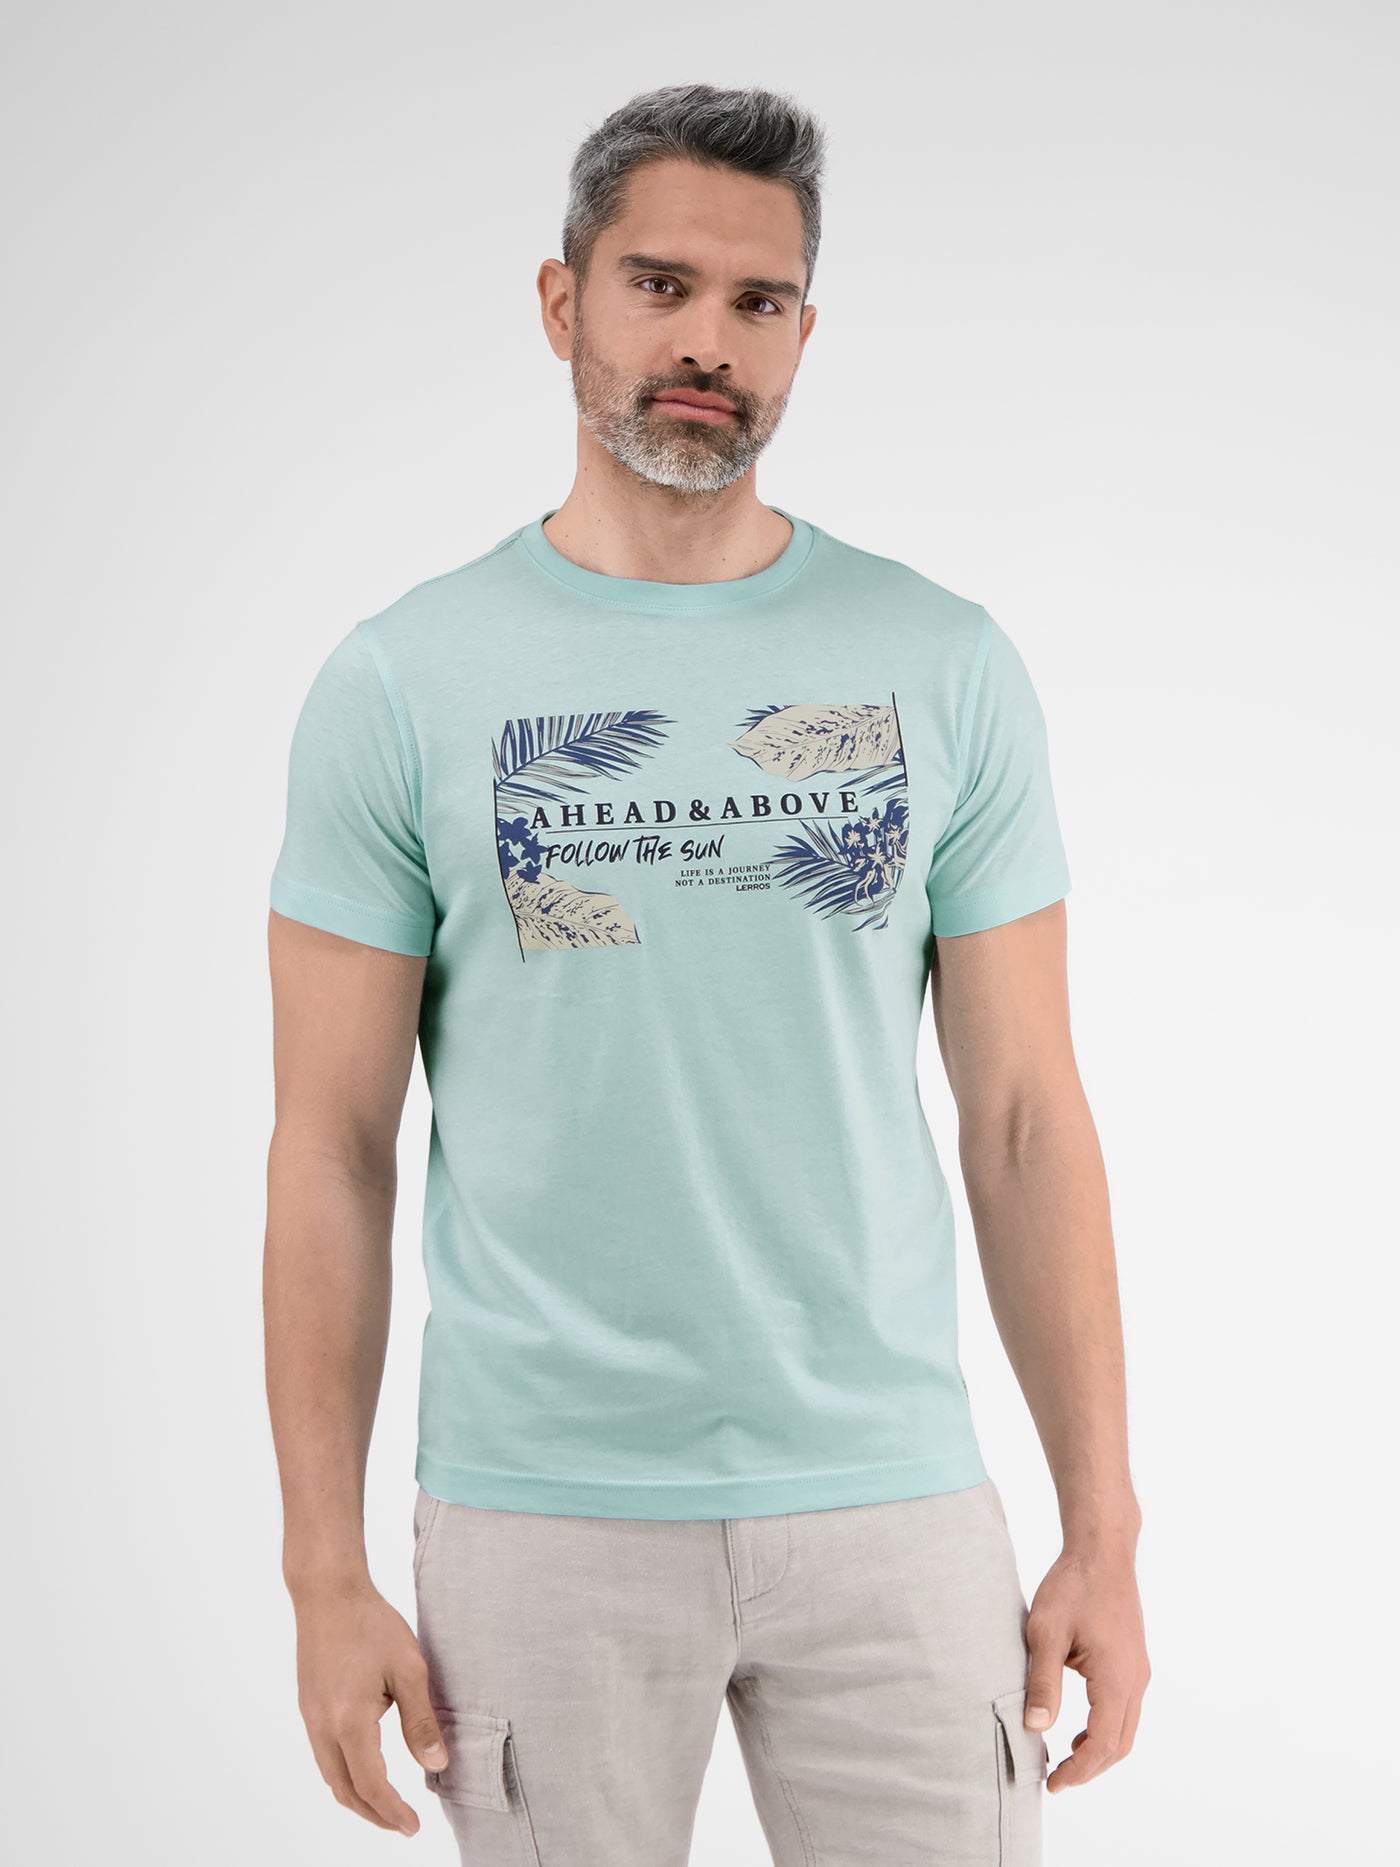 T-shirt with design photo print